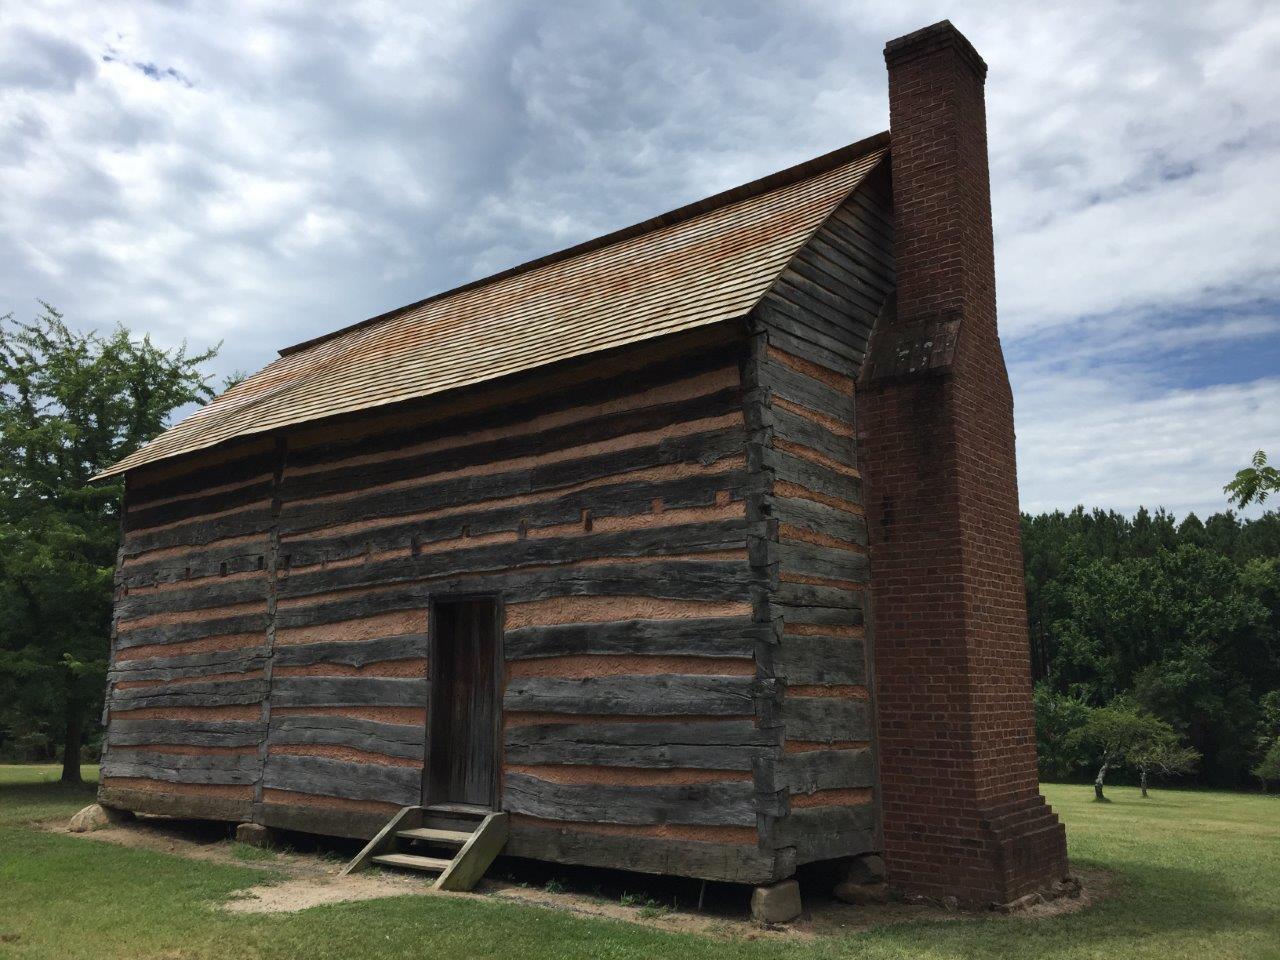 James Polk birthplace - Mecklenburg County, North Carolina